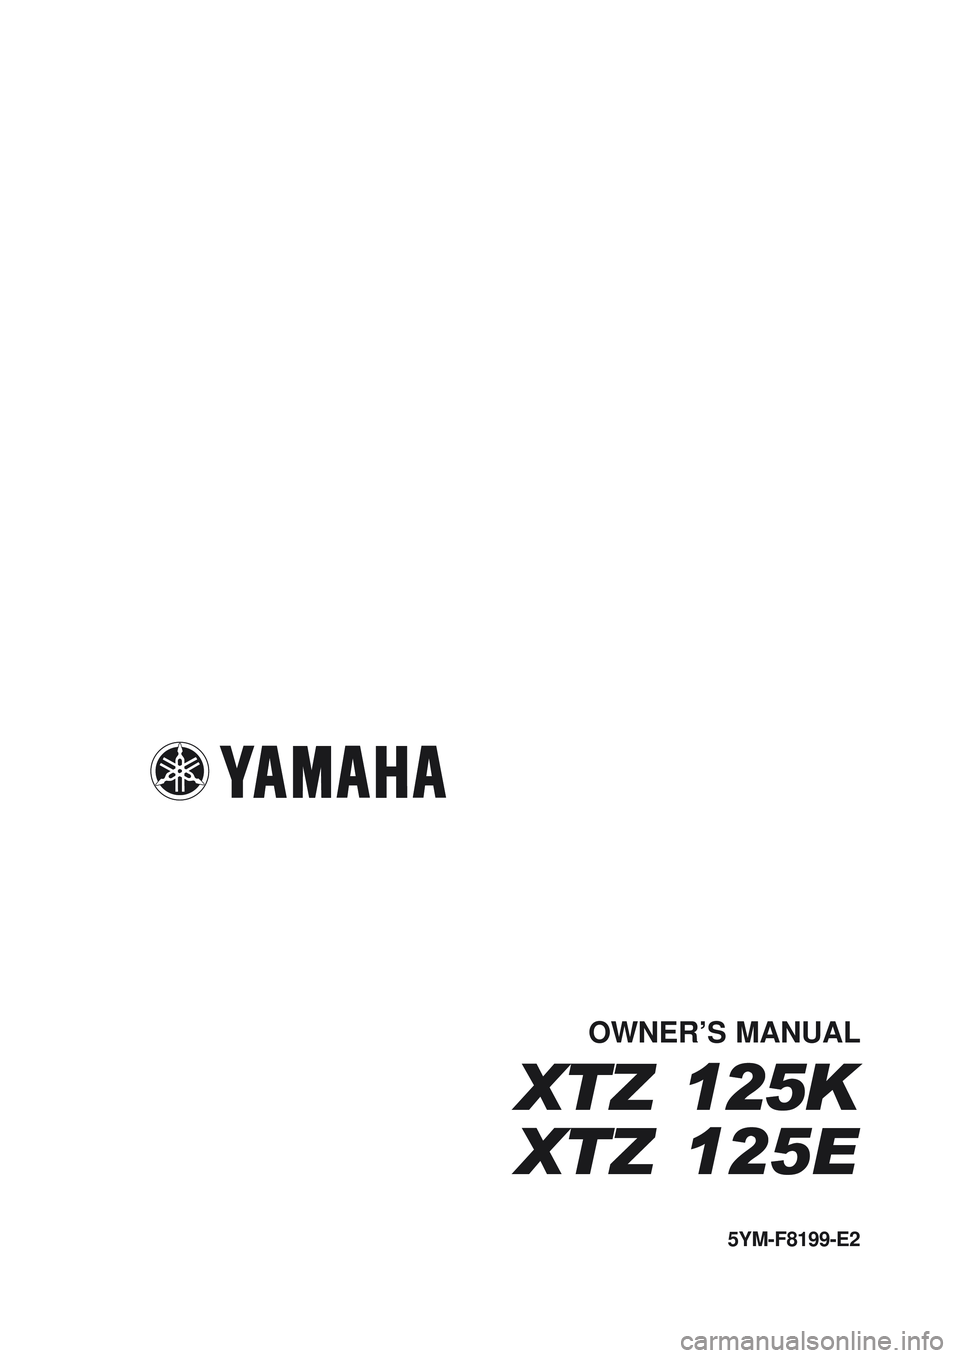 YAMAHA XTZ125 2006  Owners Manual I
I5YM-F8199-E2
OWNER’S MANUAL
XTZ 125K
XTZ 125E
5YM-F8199-E2
OWNER’S MANUAL
XTZ 125K
XTZ 125E 